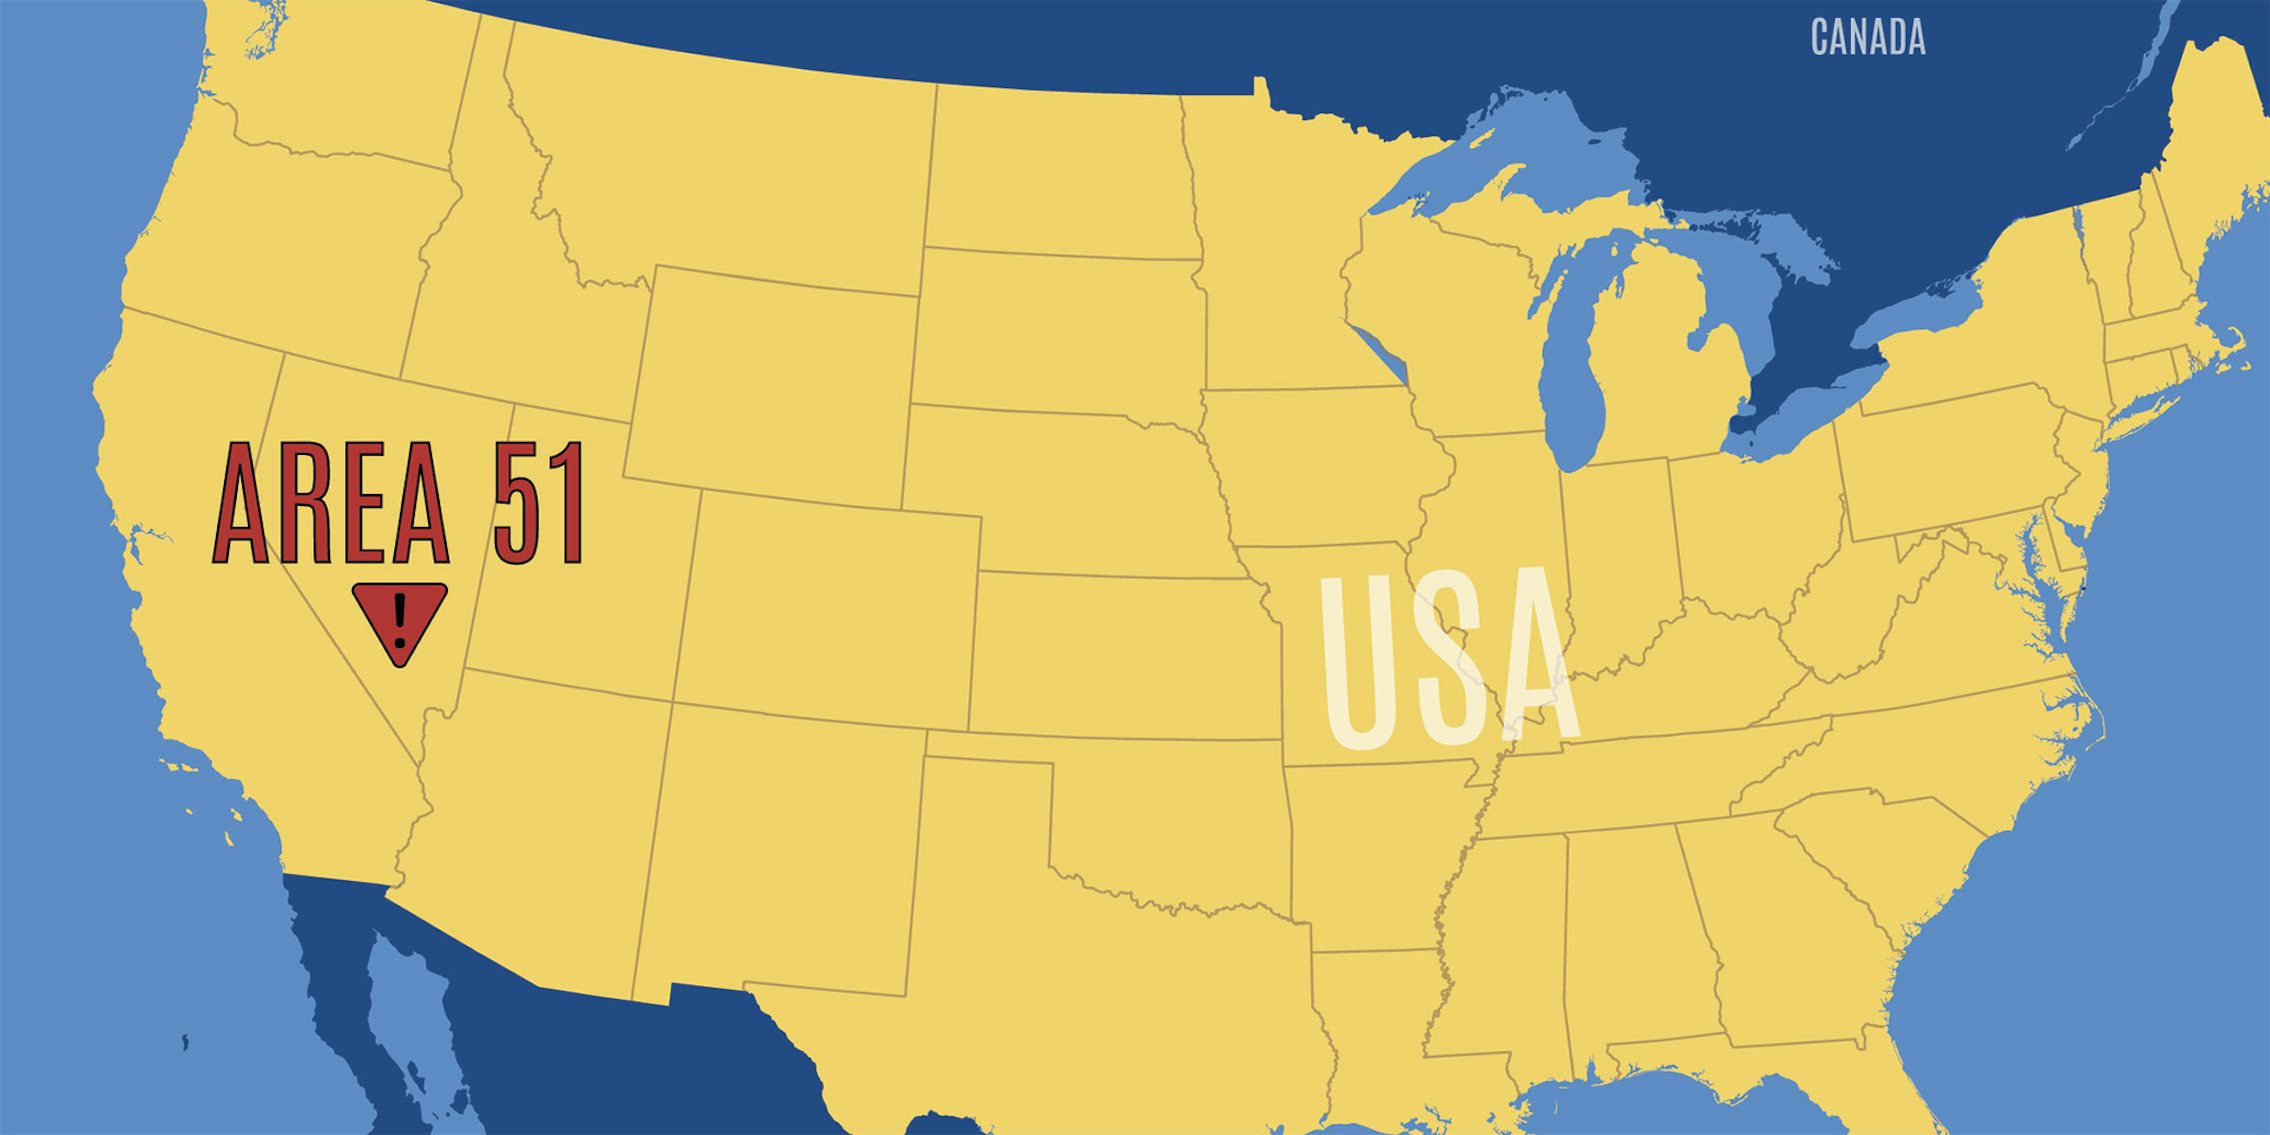 Сколько штатов или 51. Штат Невада на карте США зона 51. Зона 51 на карте США. 51 Штат США. Штат Невада зона 51 на карте.